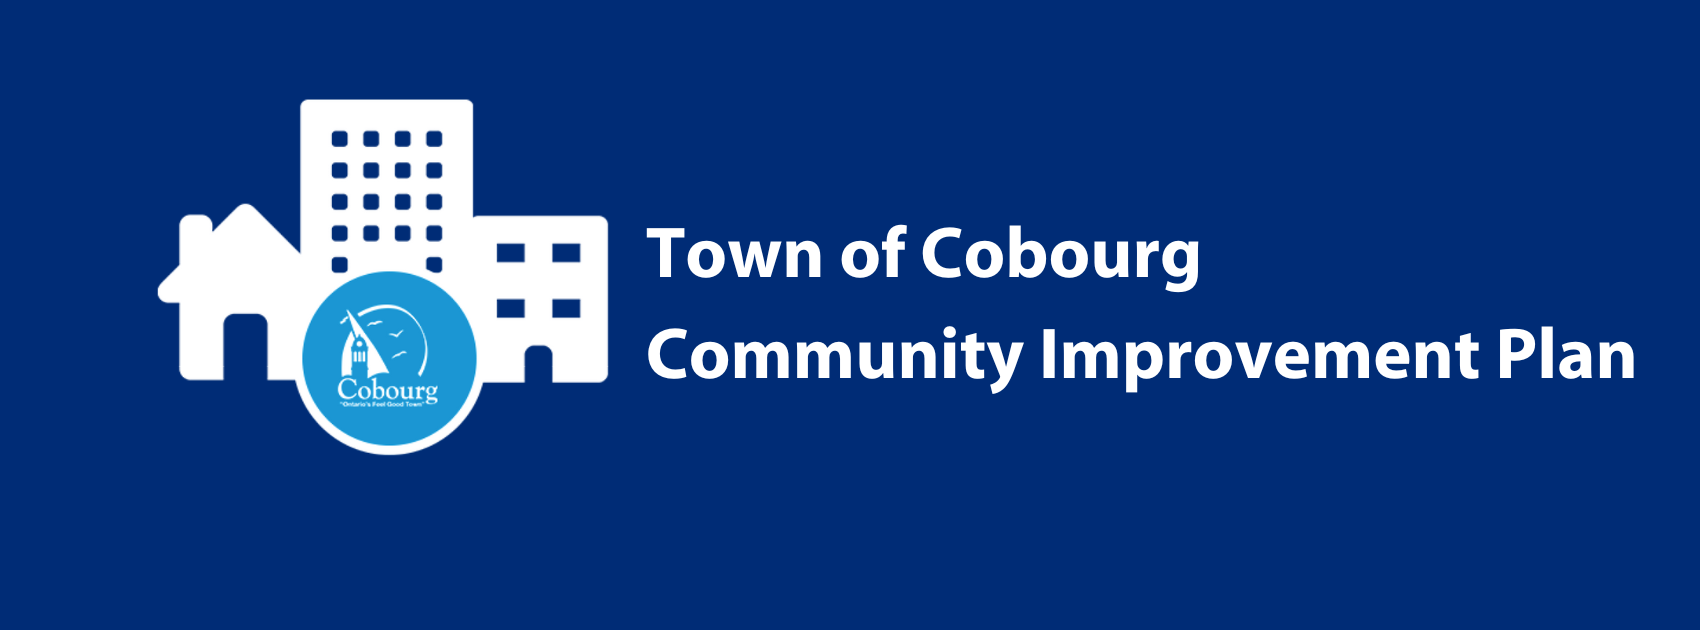 Town of Cobourg Community Improvement Plan